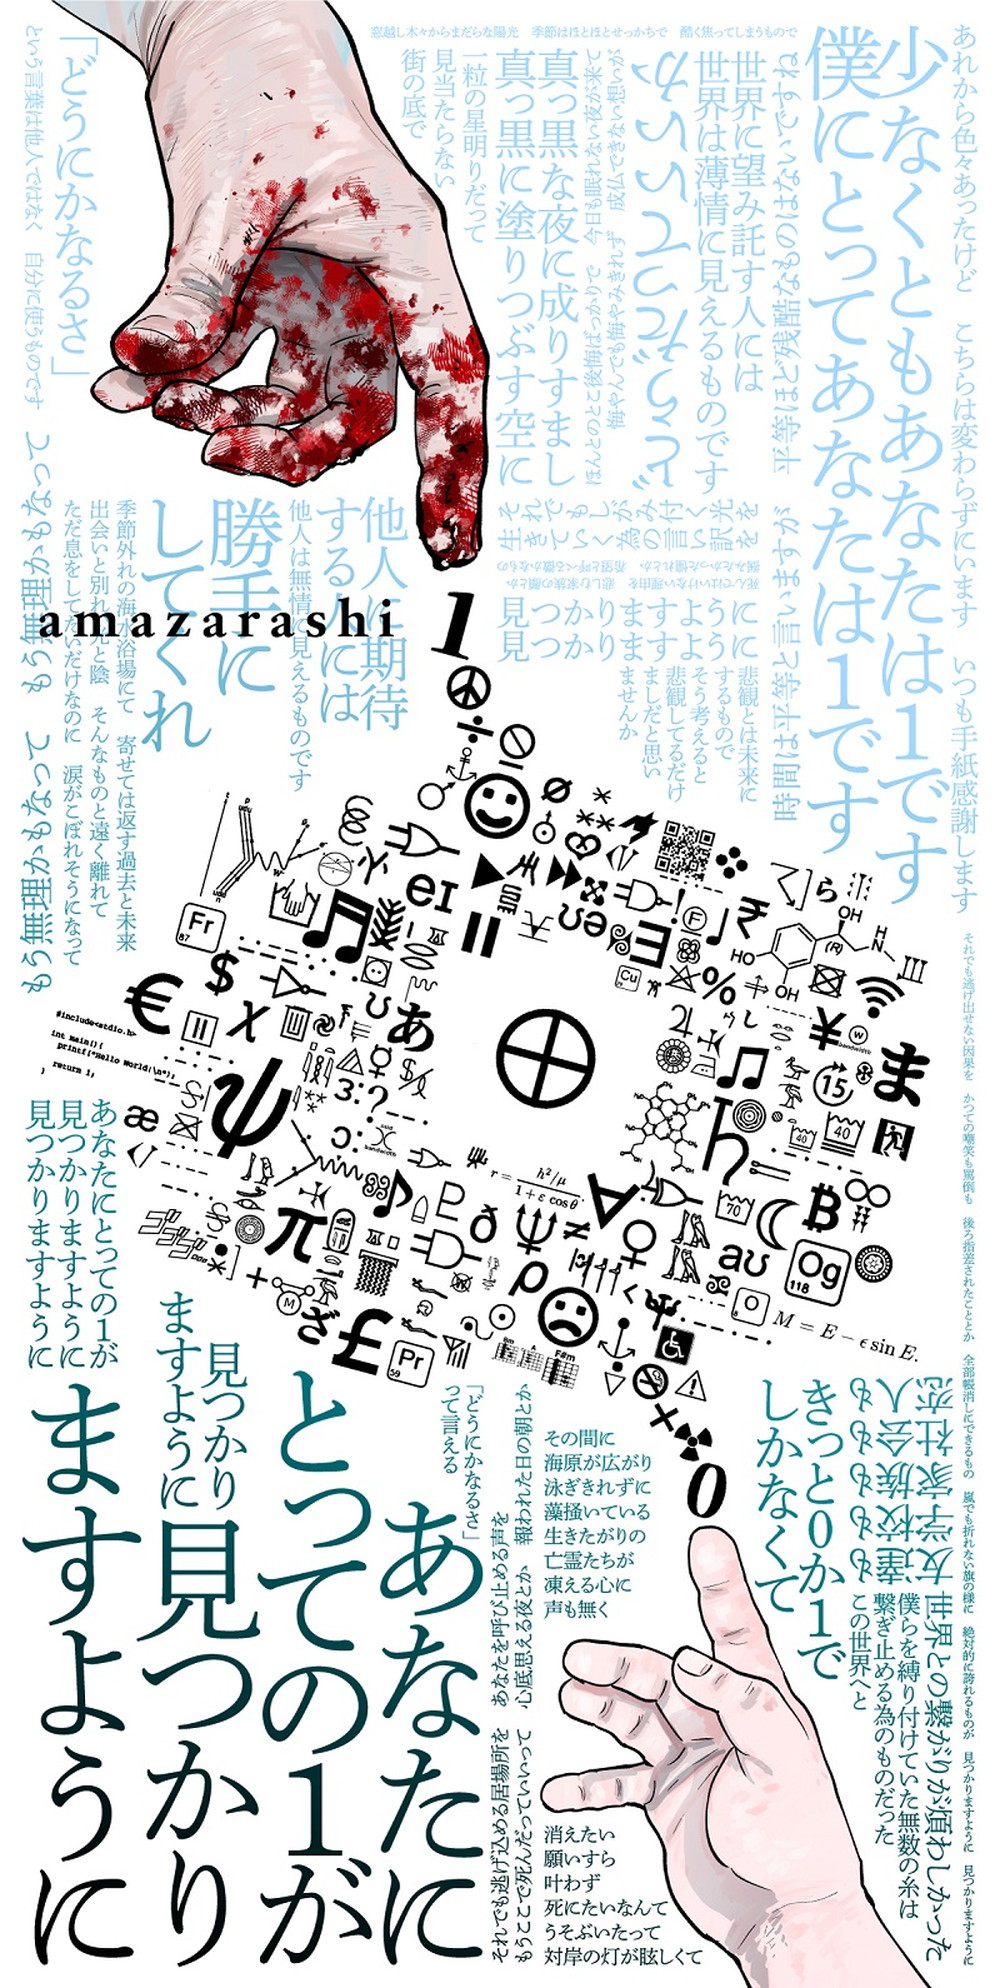 amazarashi、人気漫画『チ。』との往復書簡プロジェクト「共通言語」のスタートを発表 - 画像一覧（3/4）